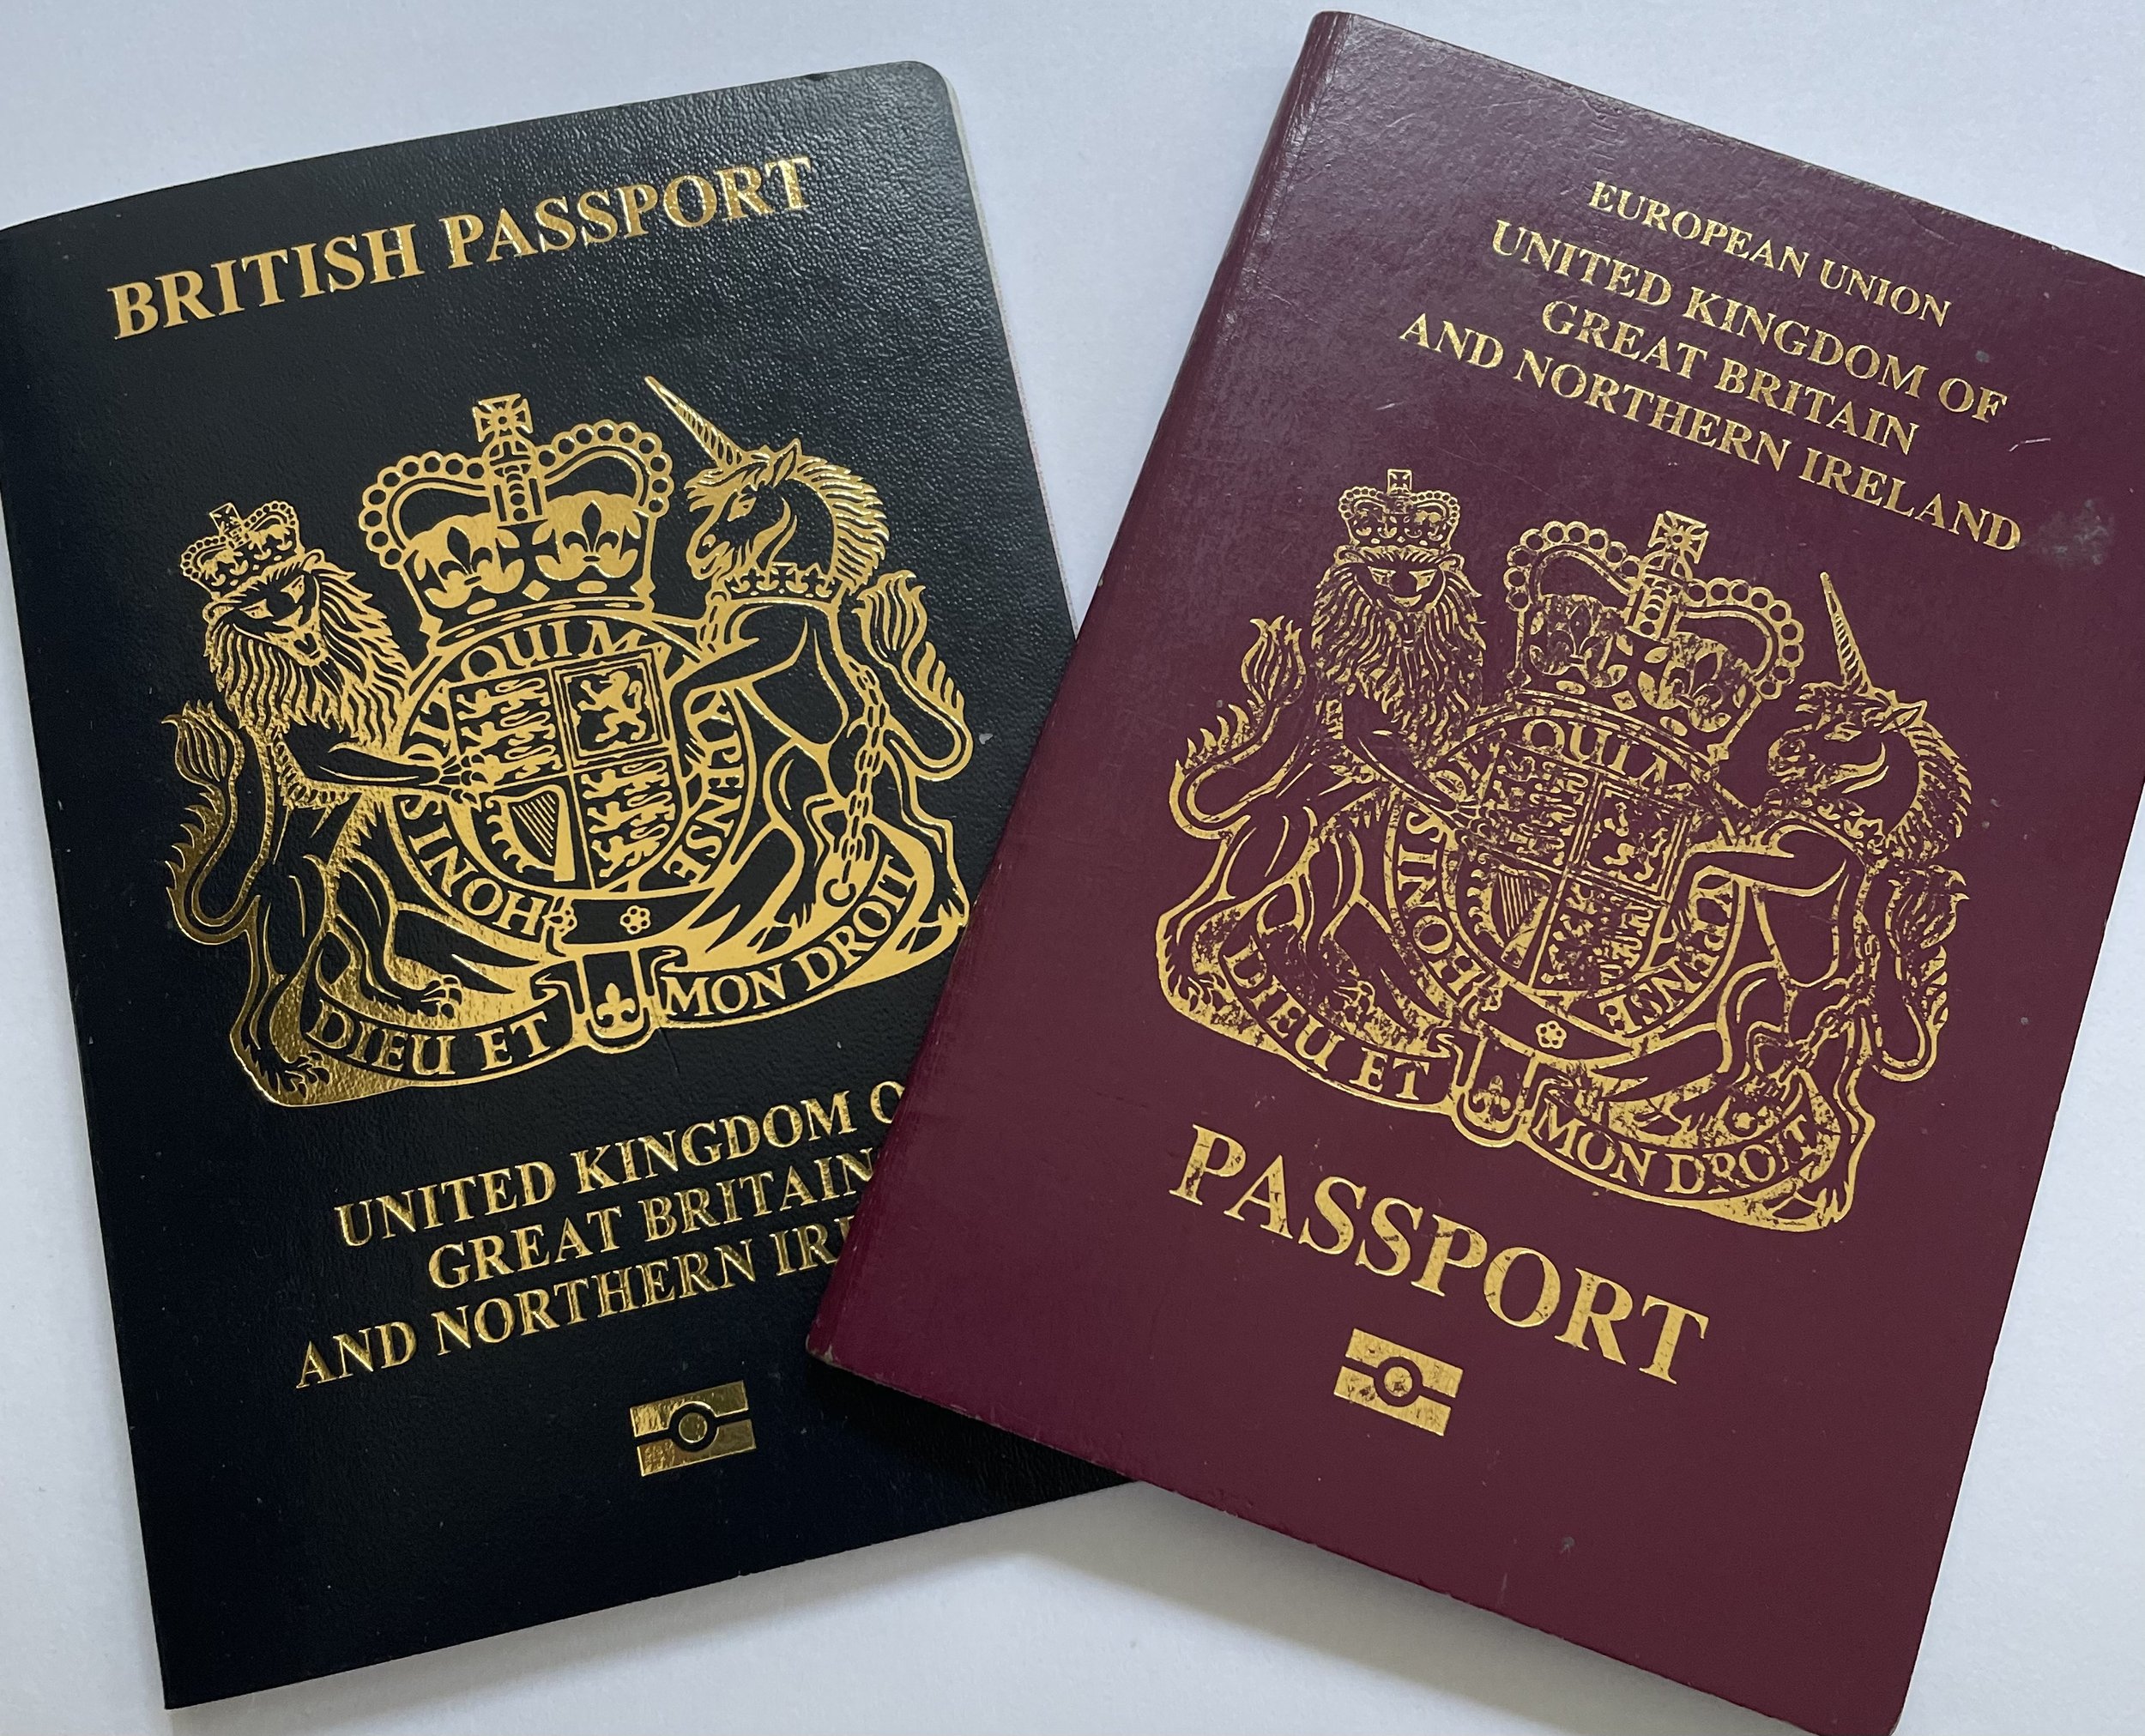 U.K. Traveller - Is your Passport Valid in Europe? — Cruise Lowdown